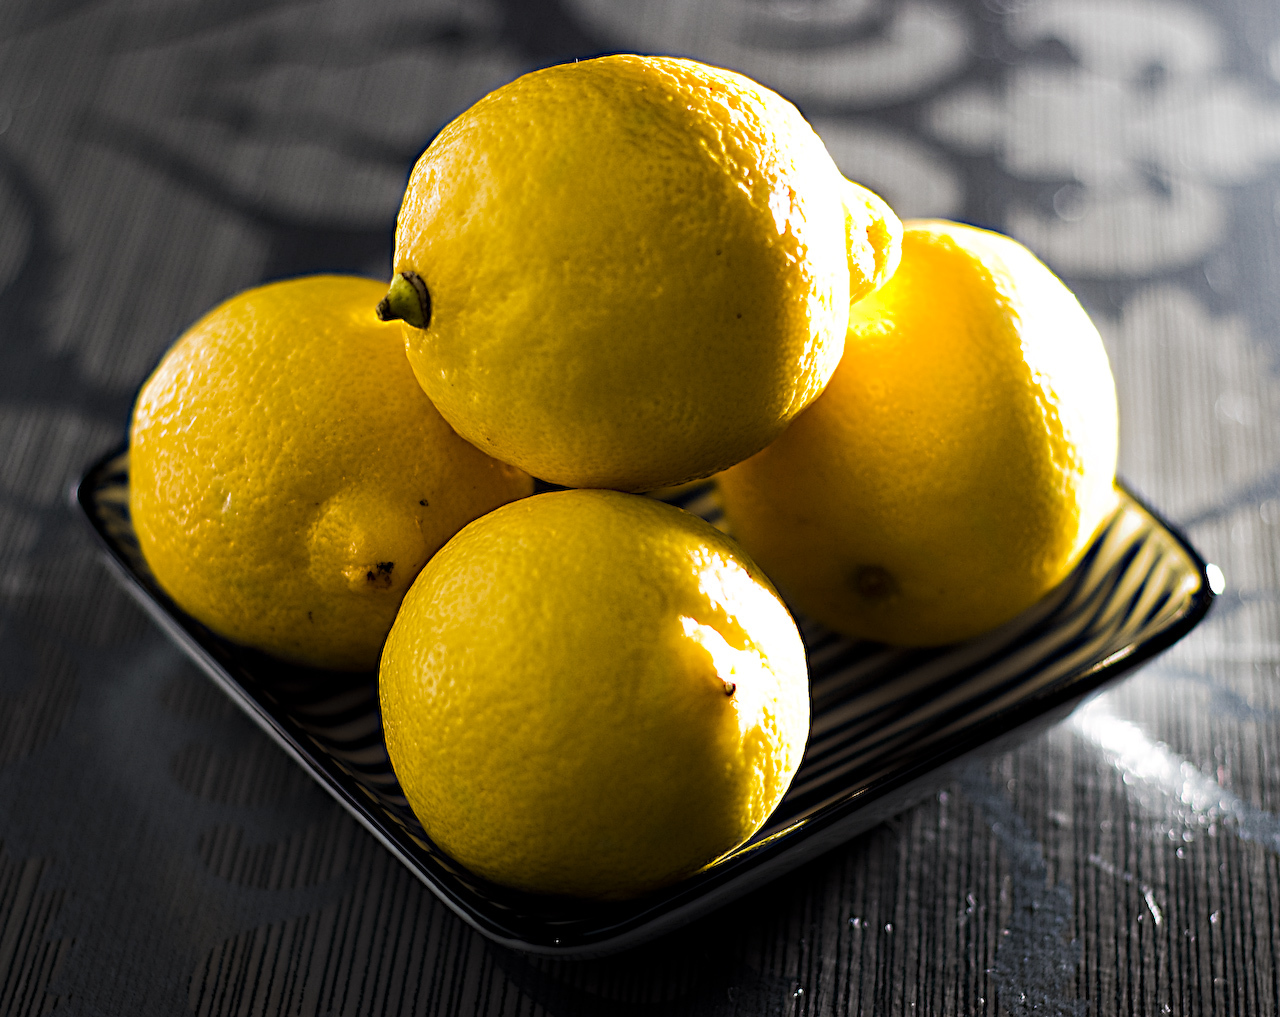 Citrons ©Mats Törnberg CC BY-NC 2.0